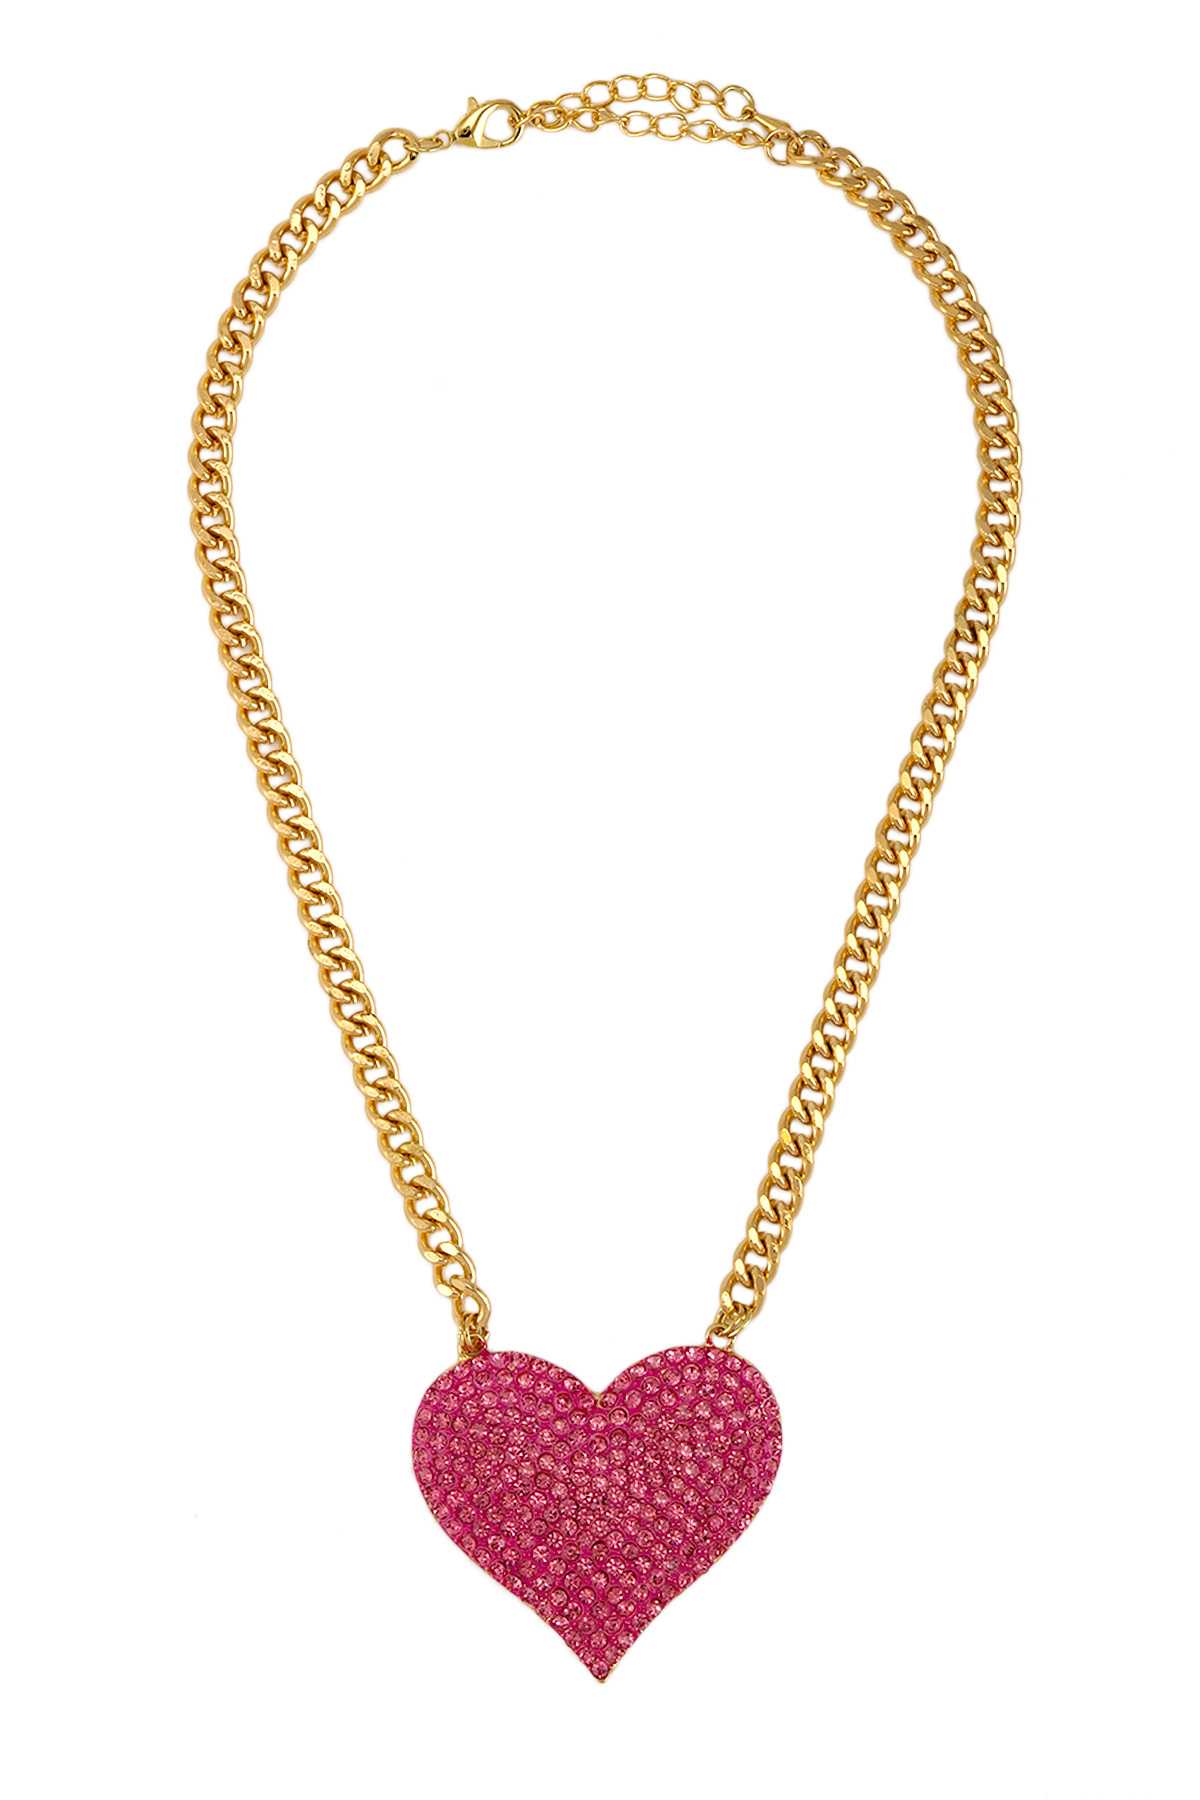 Rhinestone Heart Charm Metal Chain Necklace